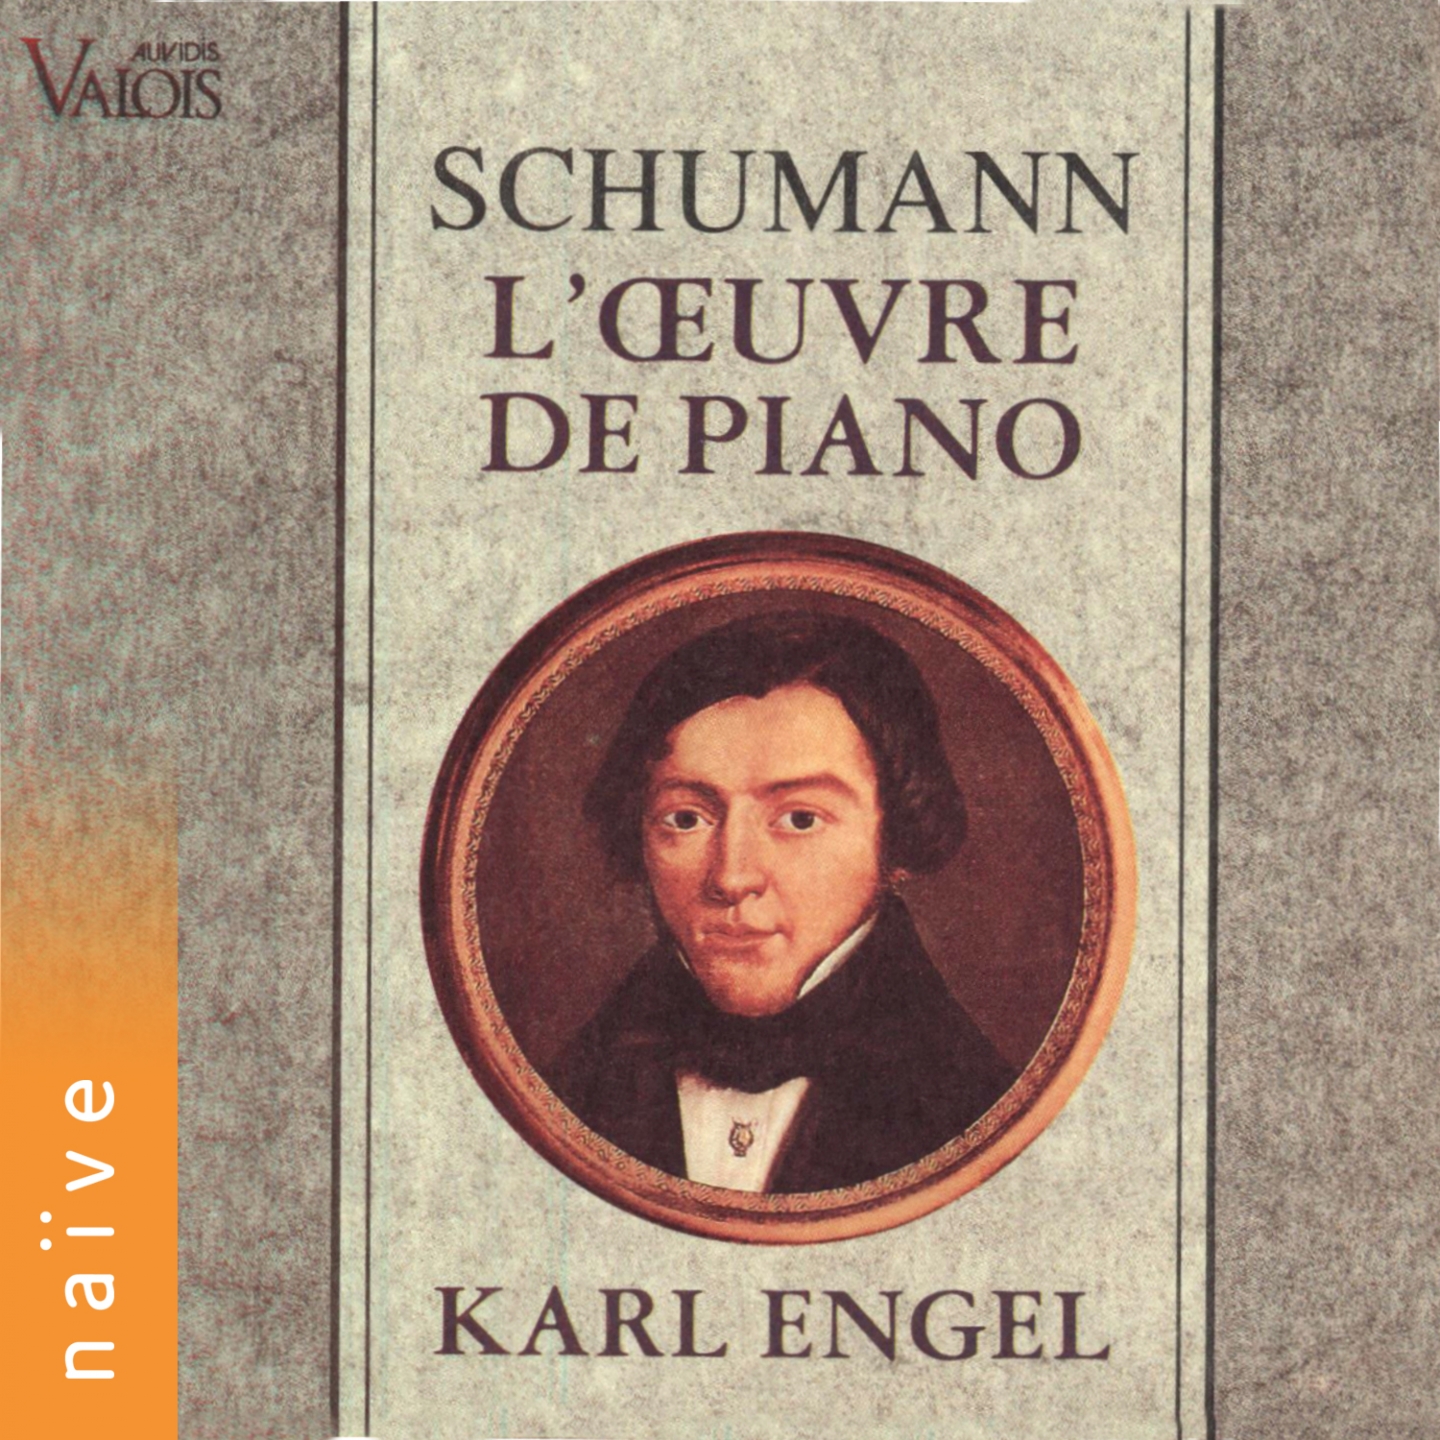 Faschingsschwank aus Wien, Op. 26: No. 1 in B-Flat Major, Allegro